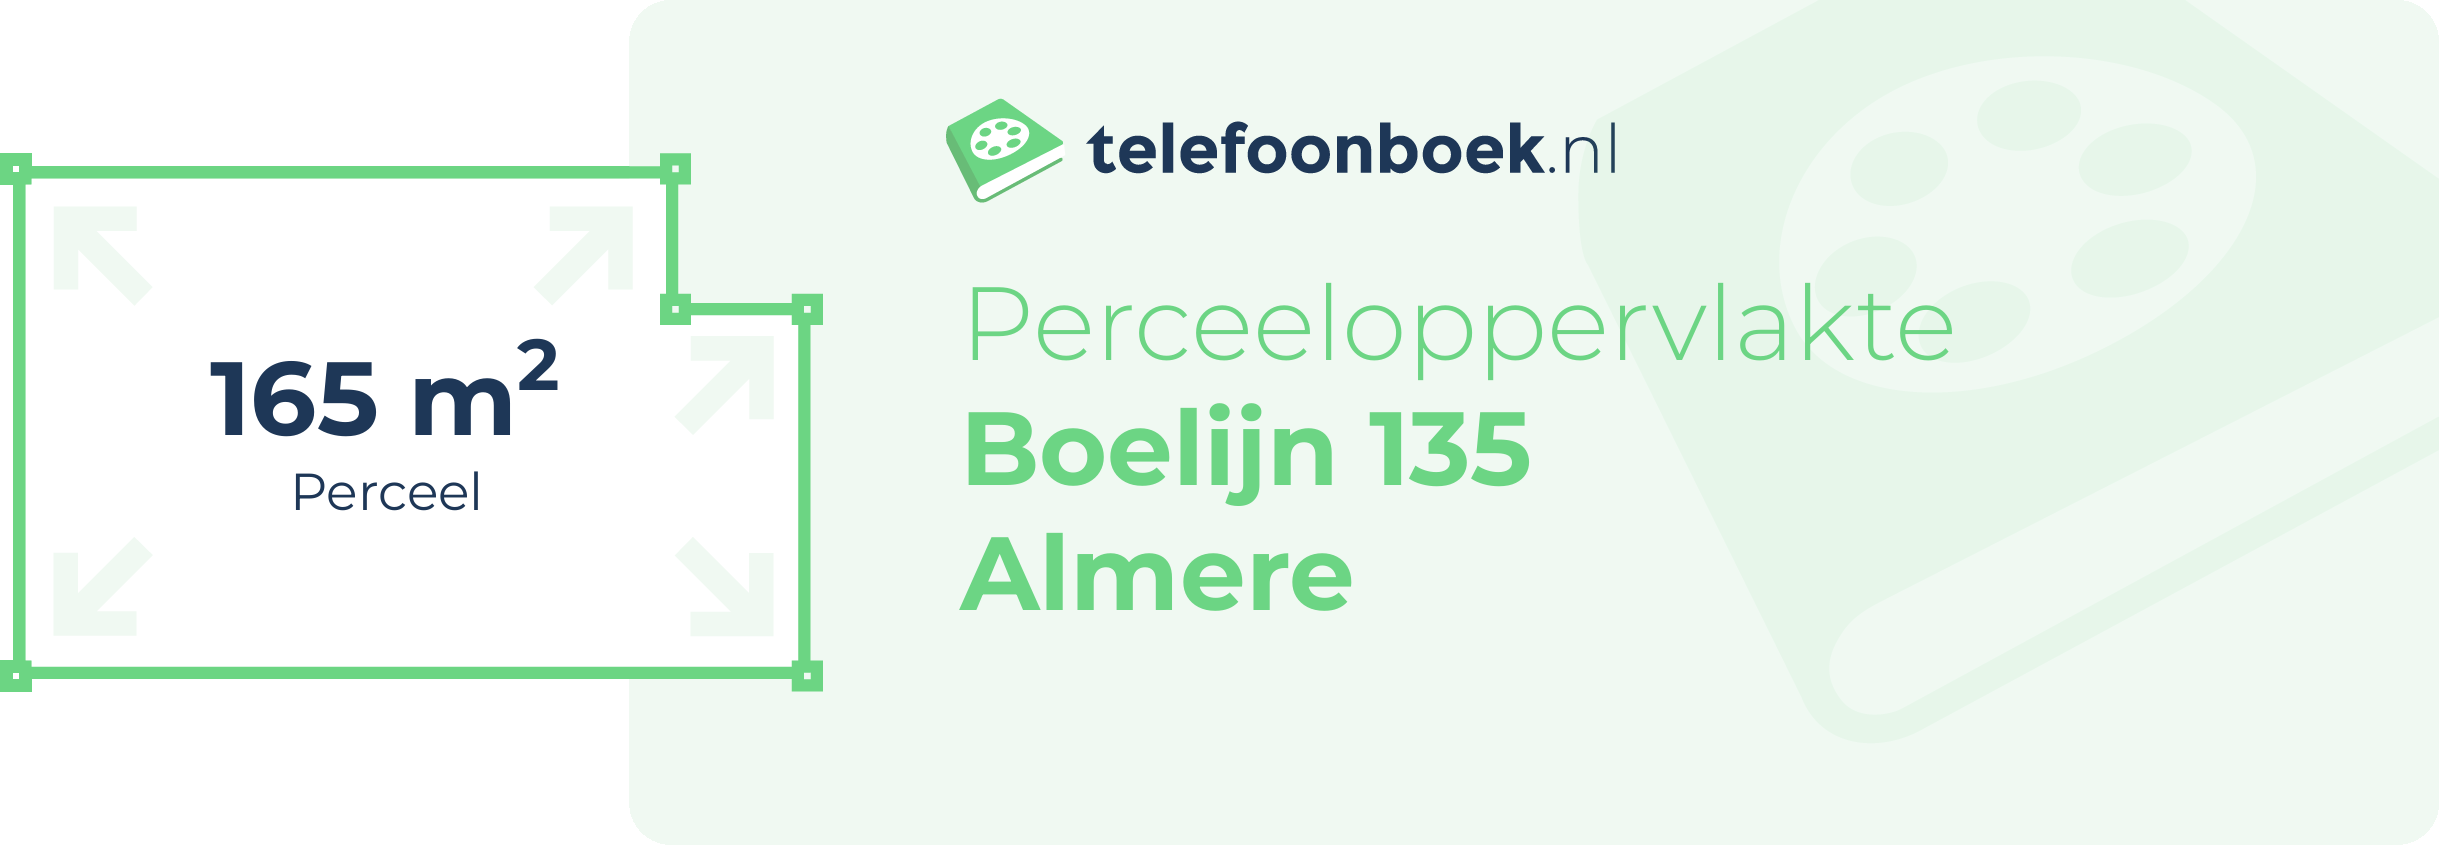 Perceeloppervlakte Boelijn 135 Almere